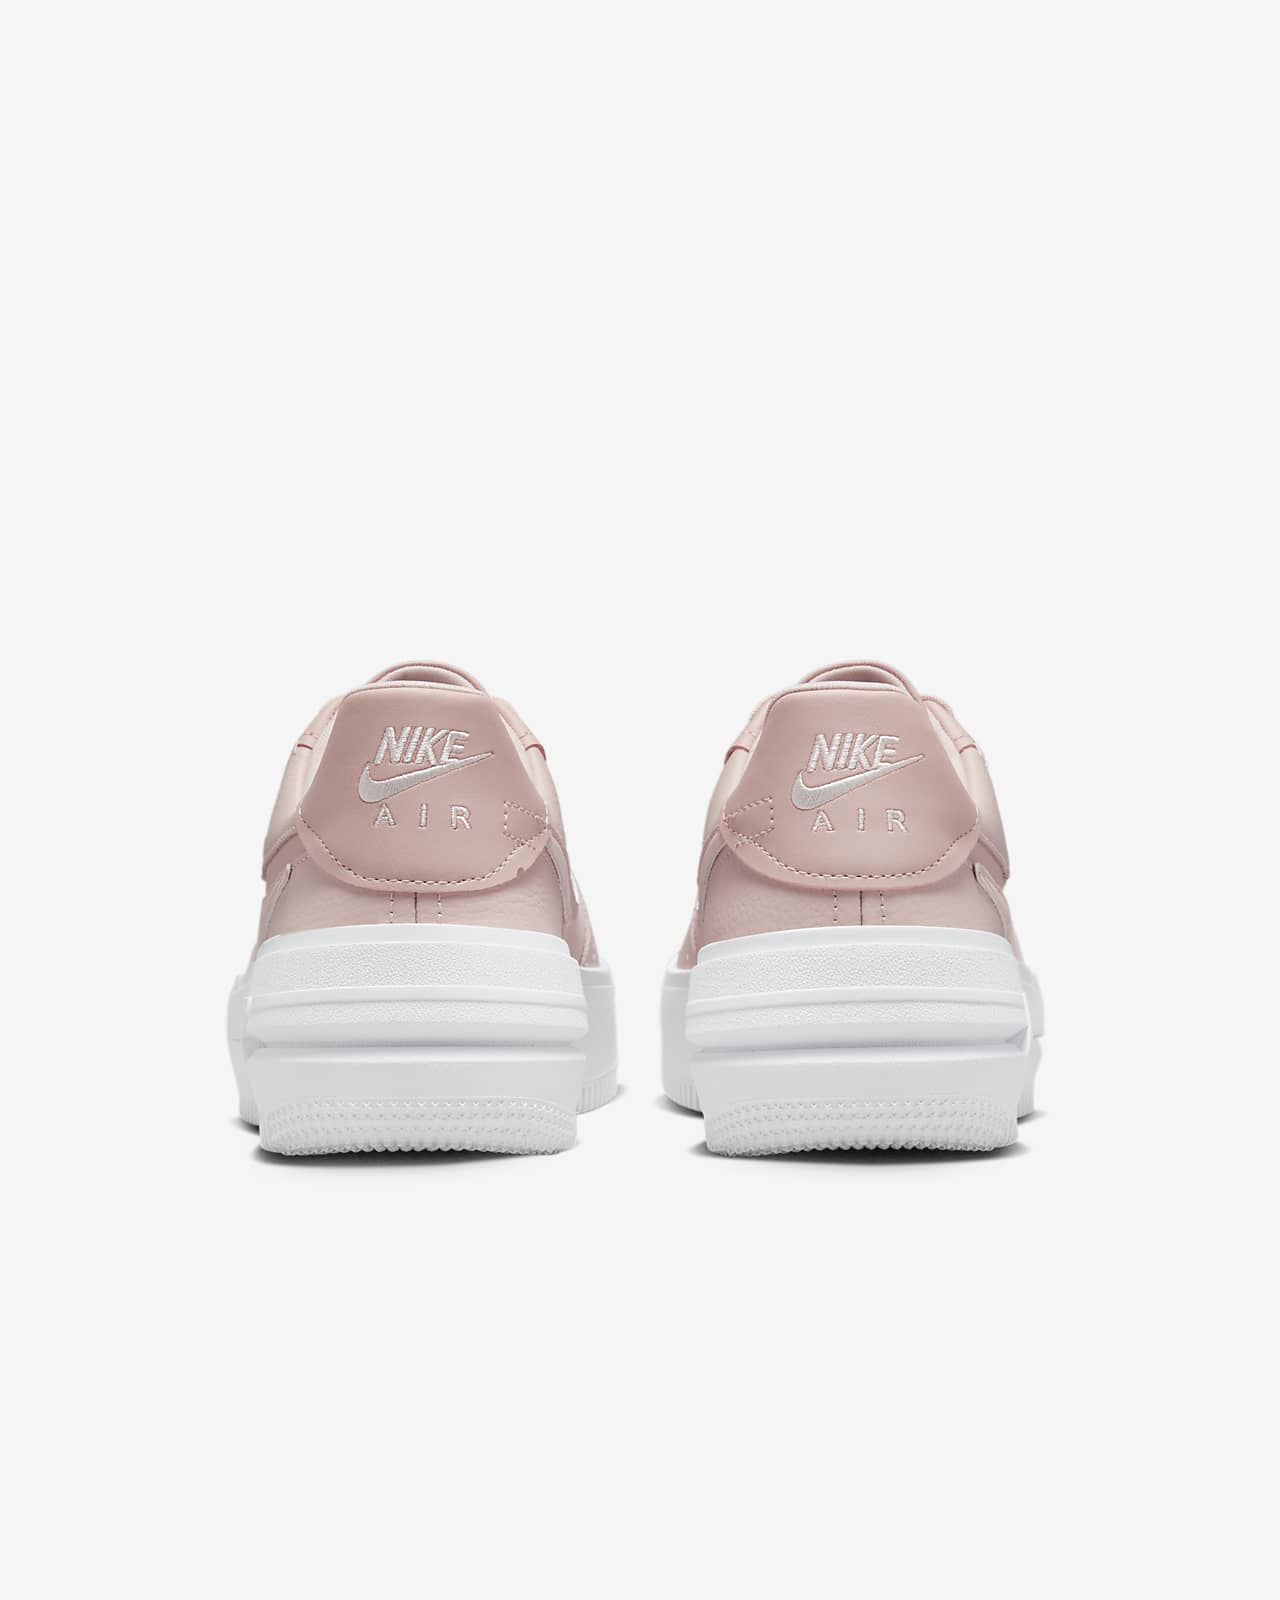 Nike Air Force 1 Sage Low Women's Shoe, White, 9